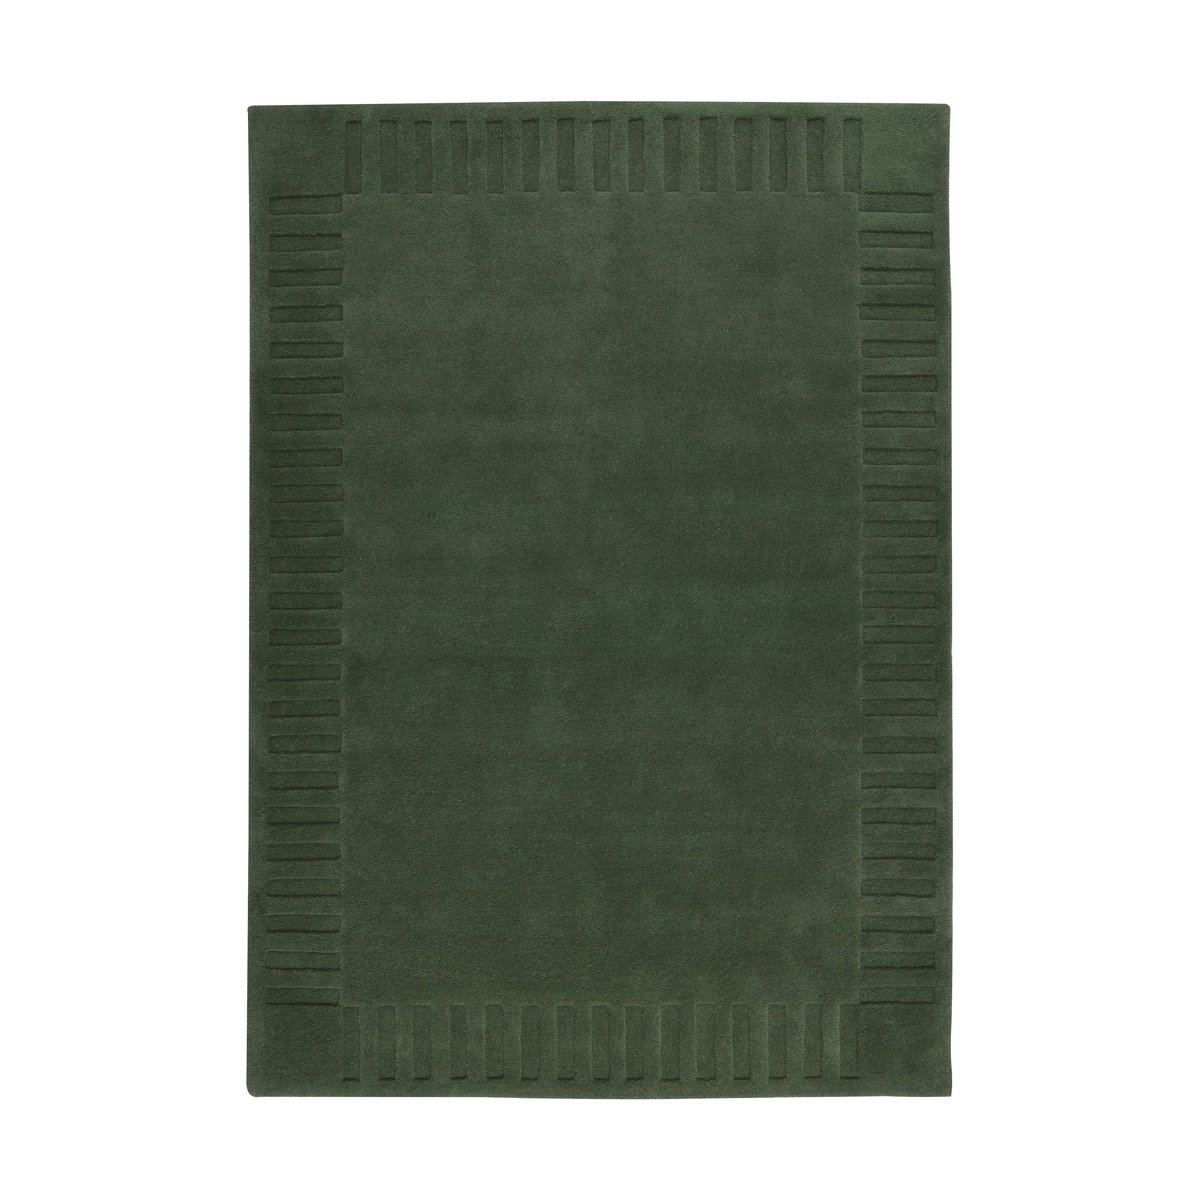 Kateha Lea original wollen vloerkeed Green-18, 200x300 cm